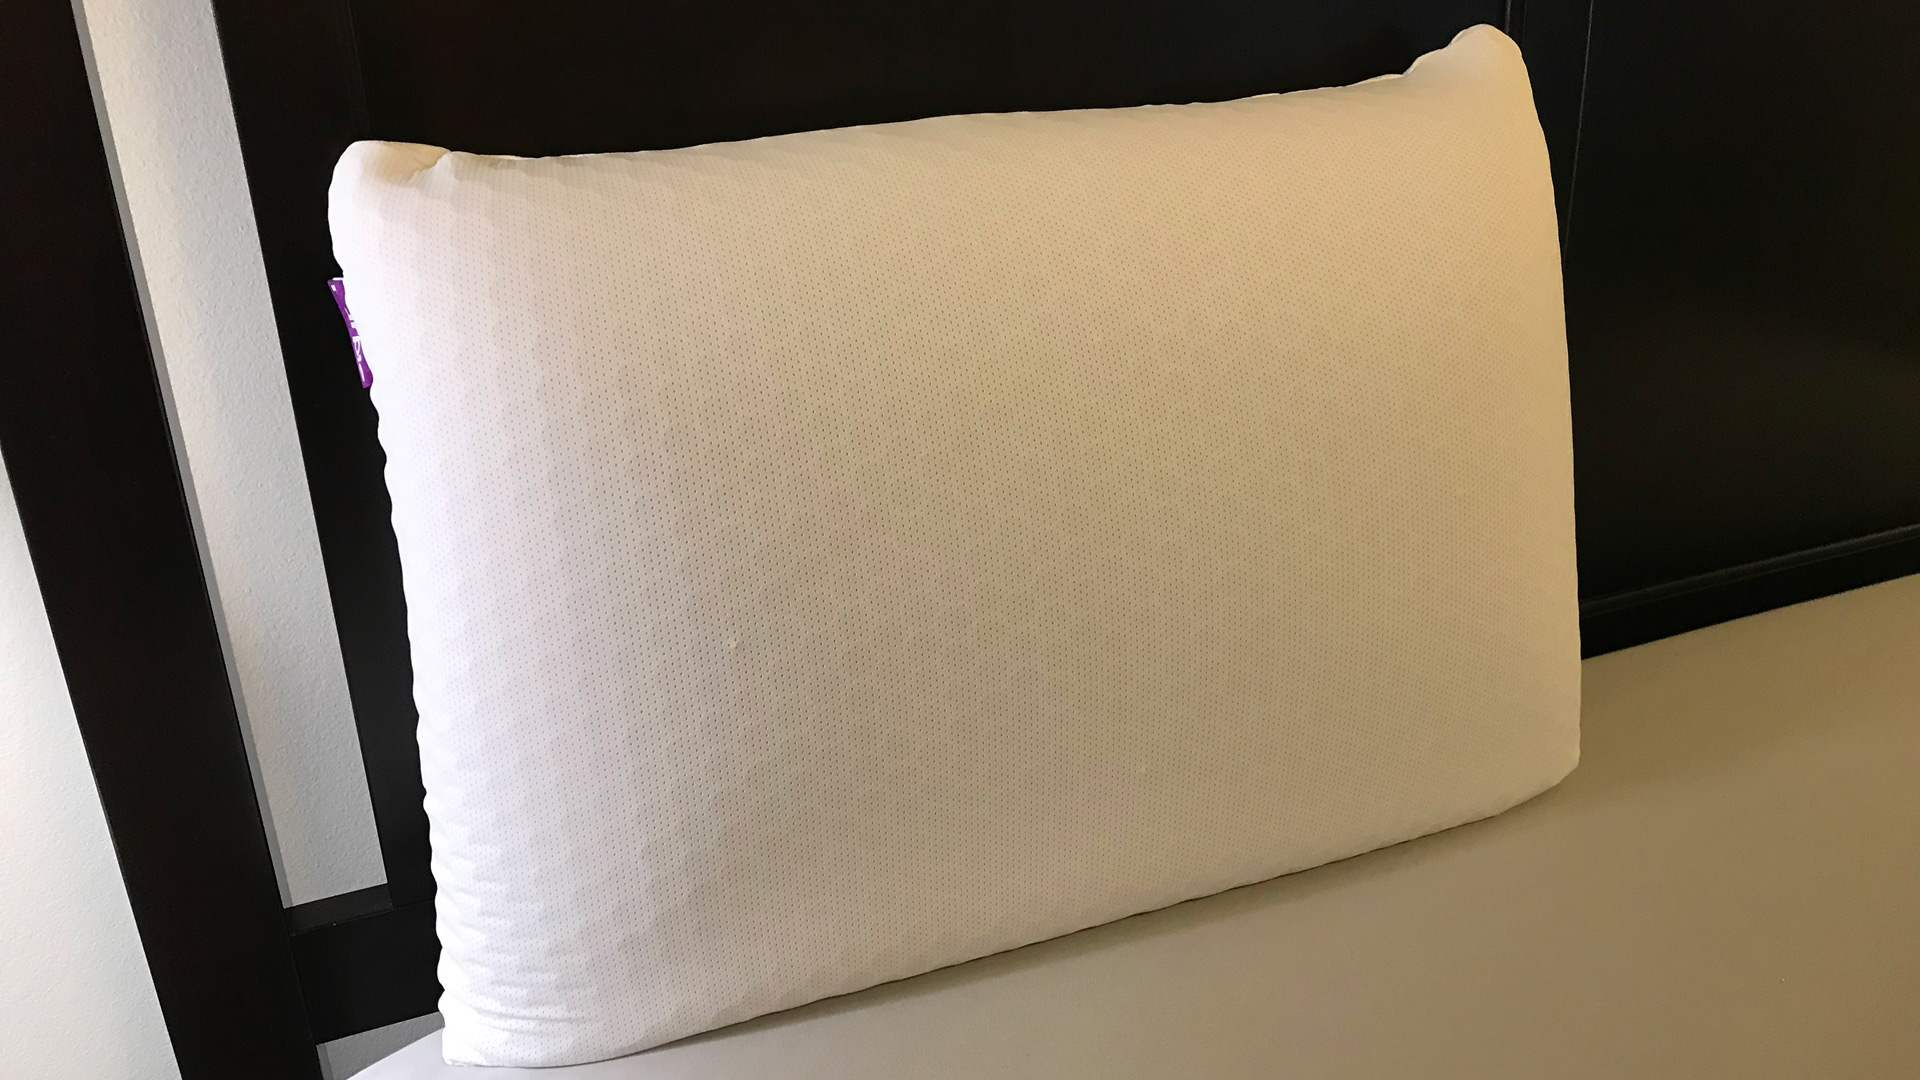 Purple Harmony Pillow-Medium Profile(standard size)